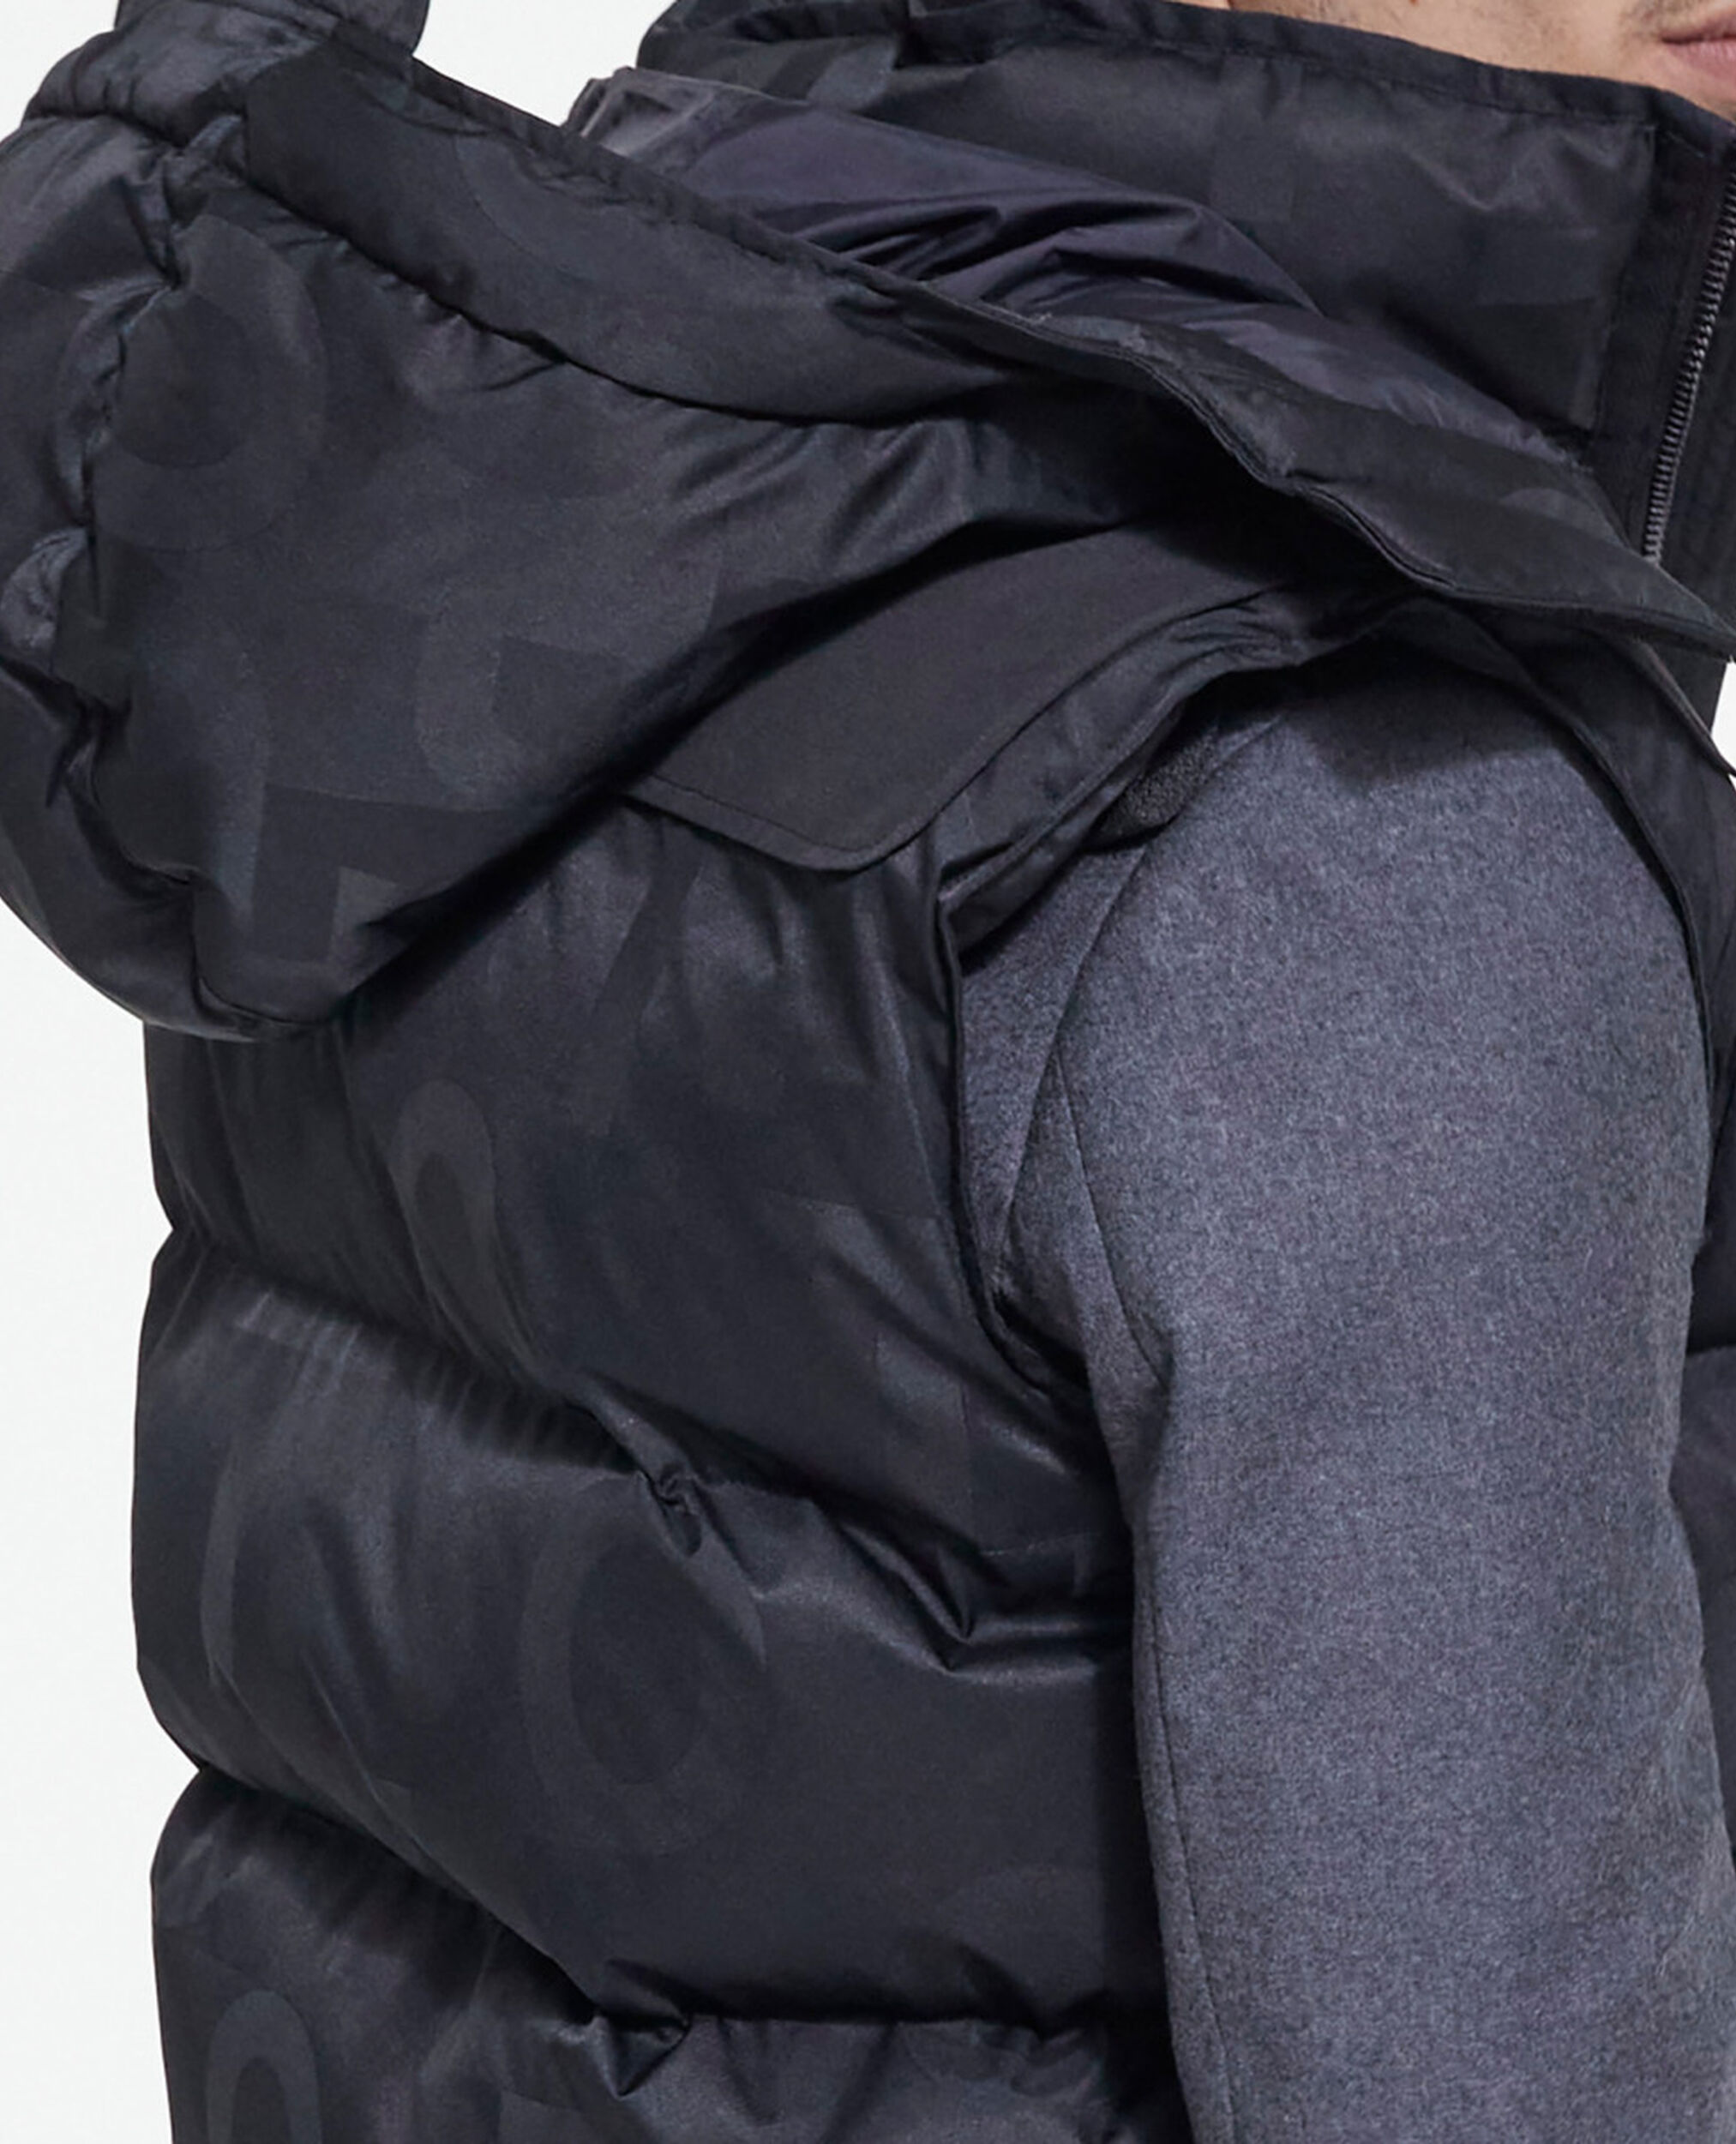 Black down jacket with The Kooples logo, BLACK, hi-res image number null